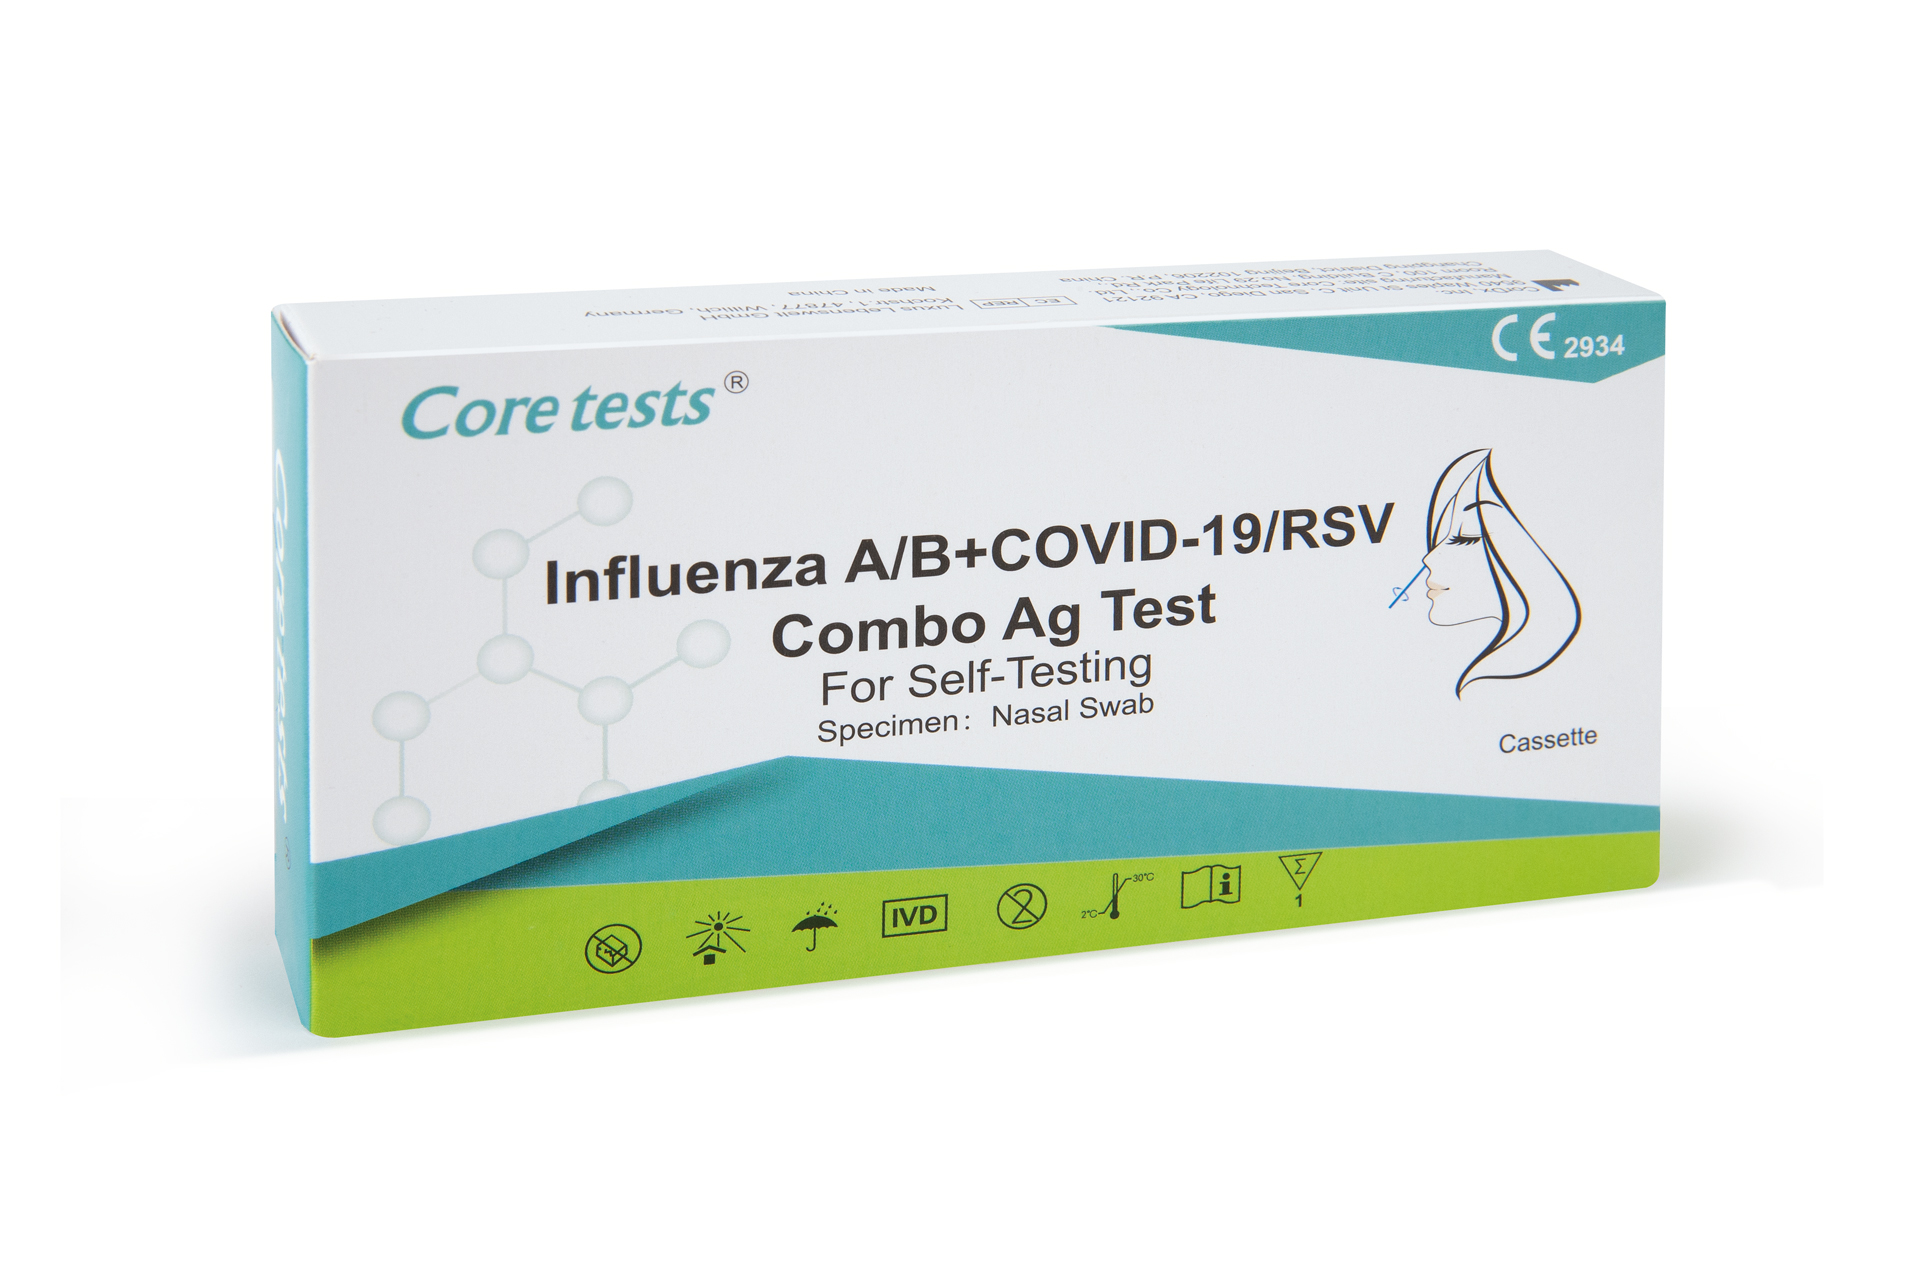 Coretests Covid-19/RSV & Influenza A+B Kombinationstest (CE2934) (1 Stück)